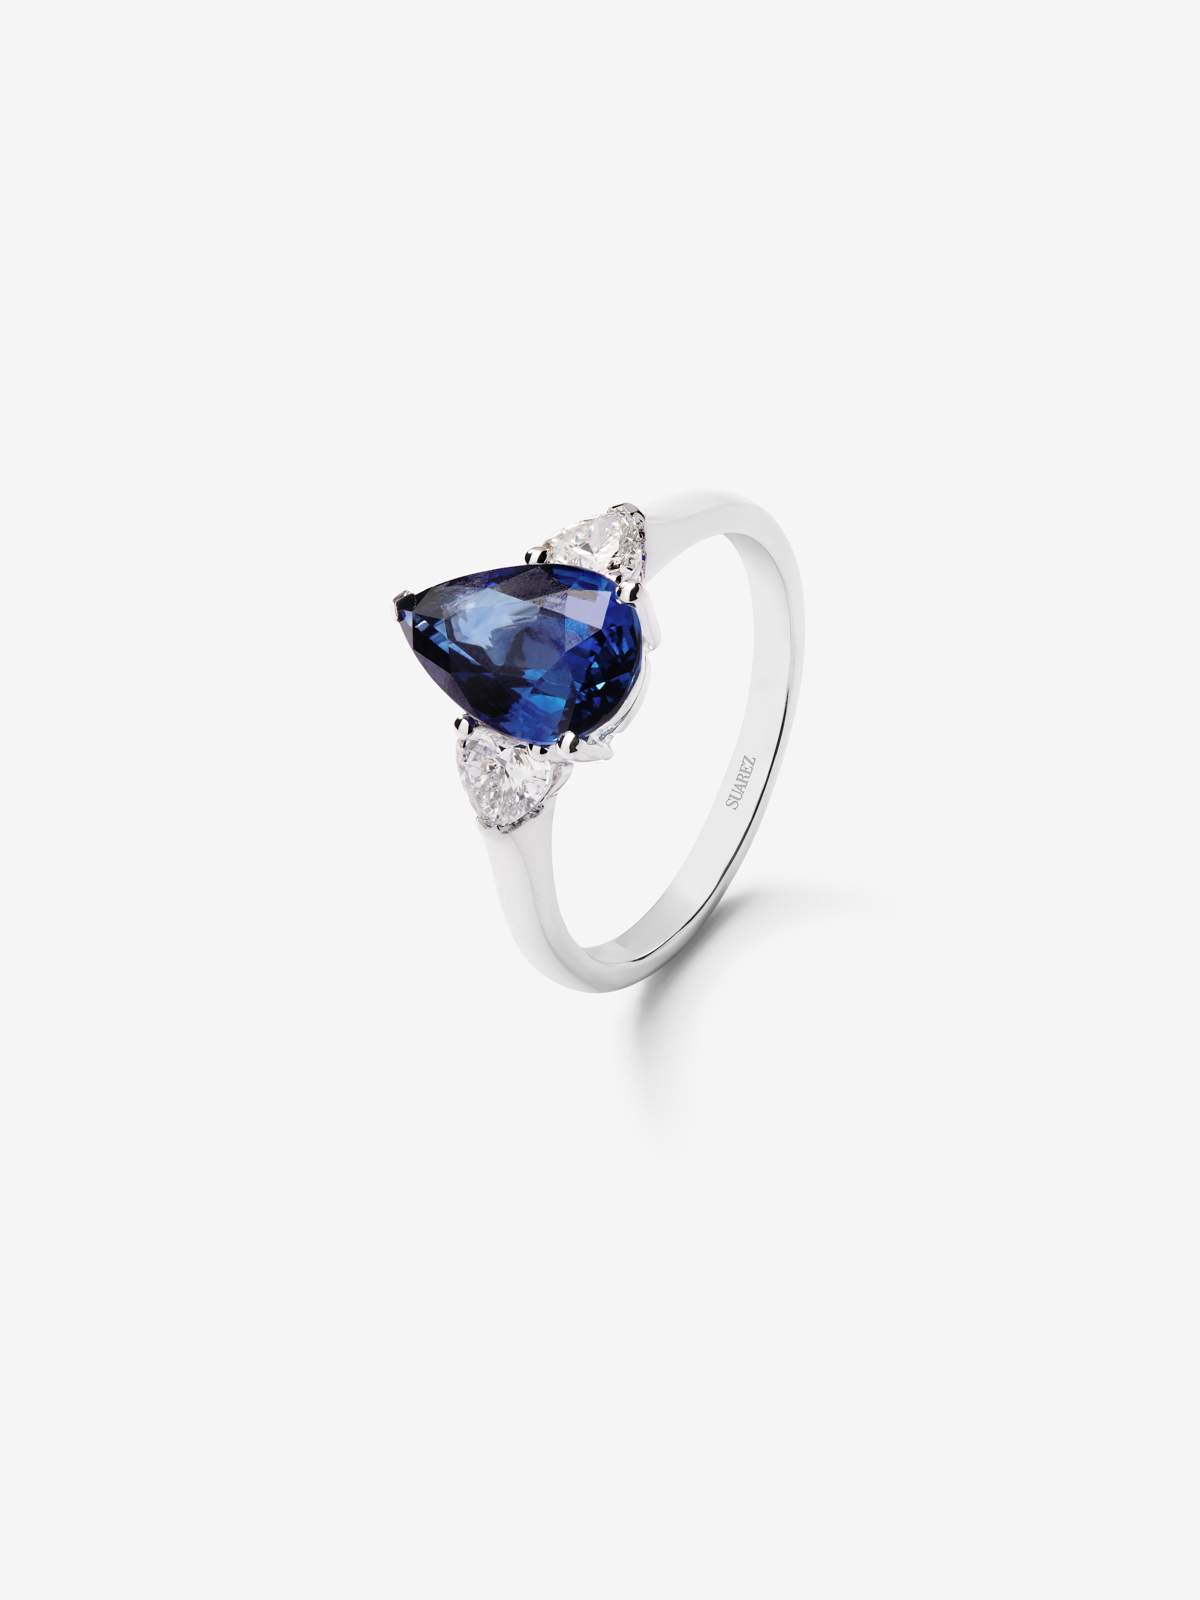 18K White Gold Ring with Royal Blue Zafir